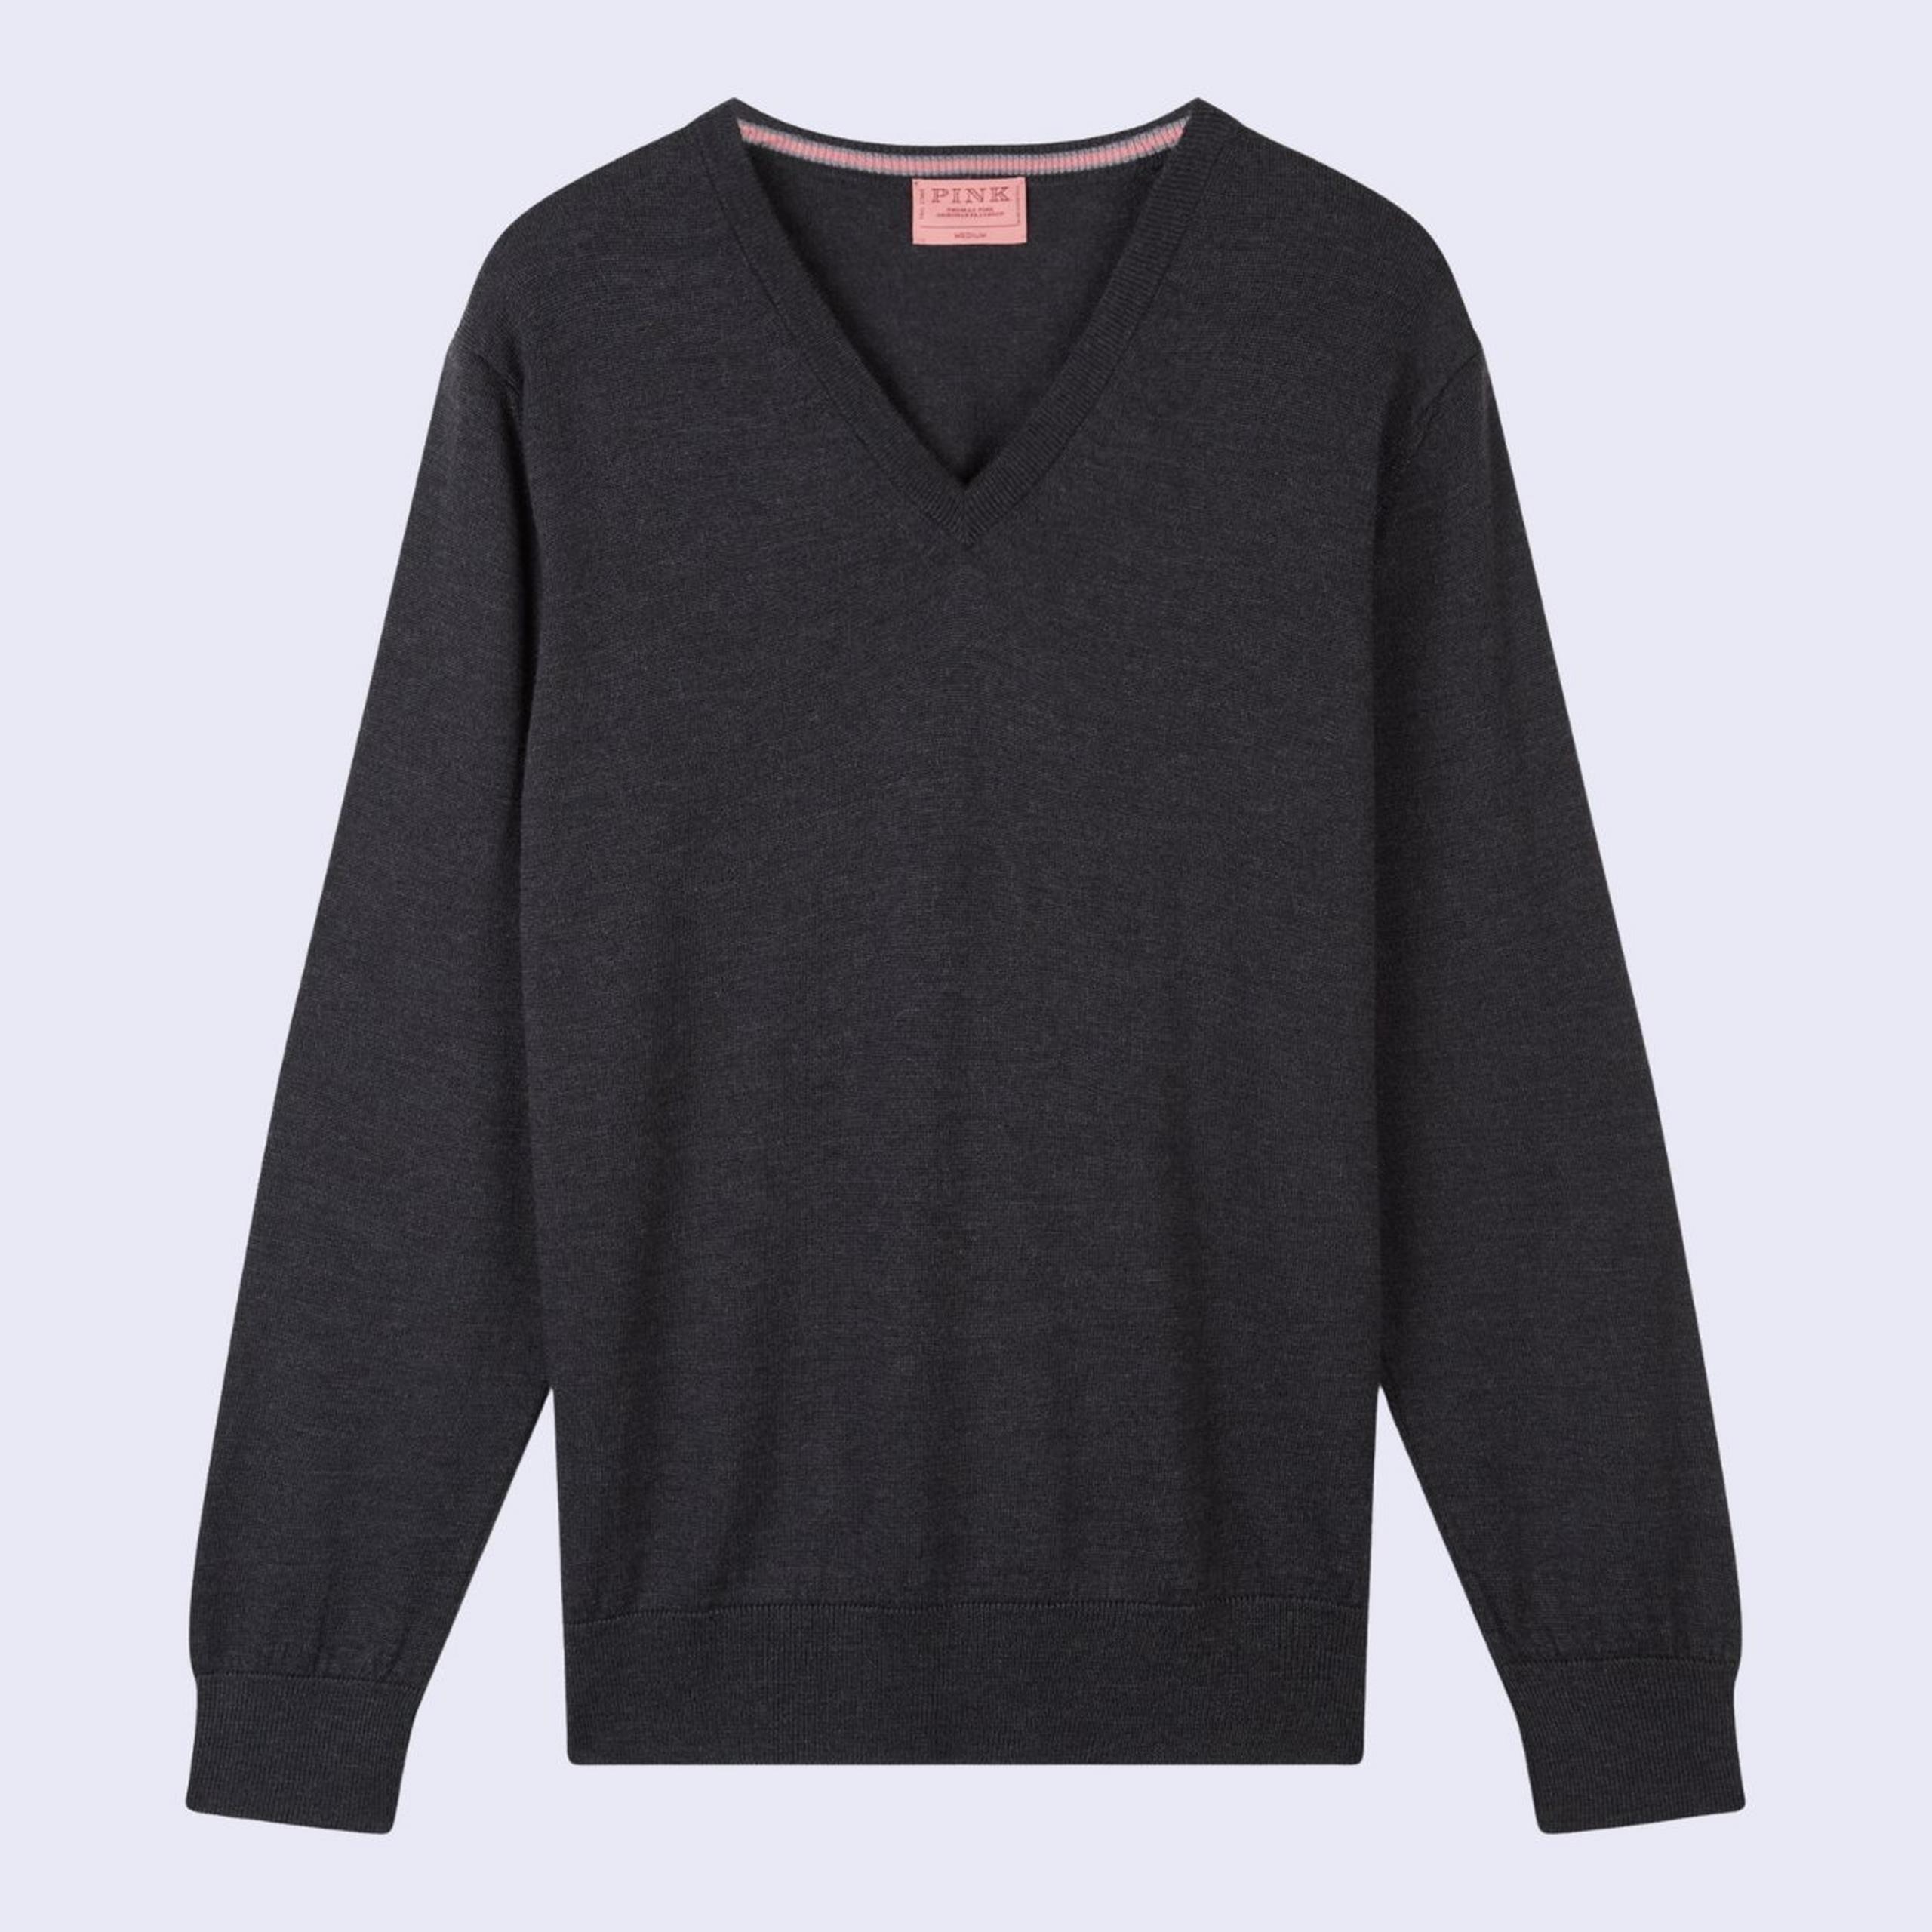 Thomas Pink's Dark Grey V-neck Merino Wool Sweater